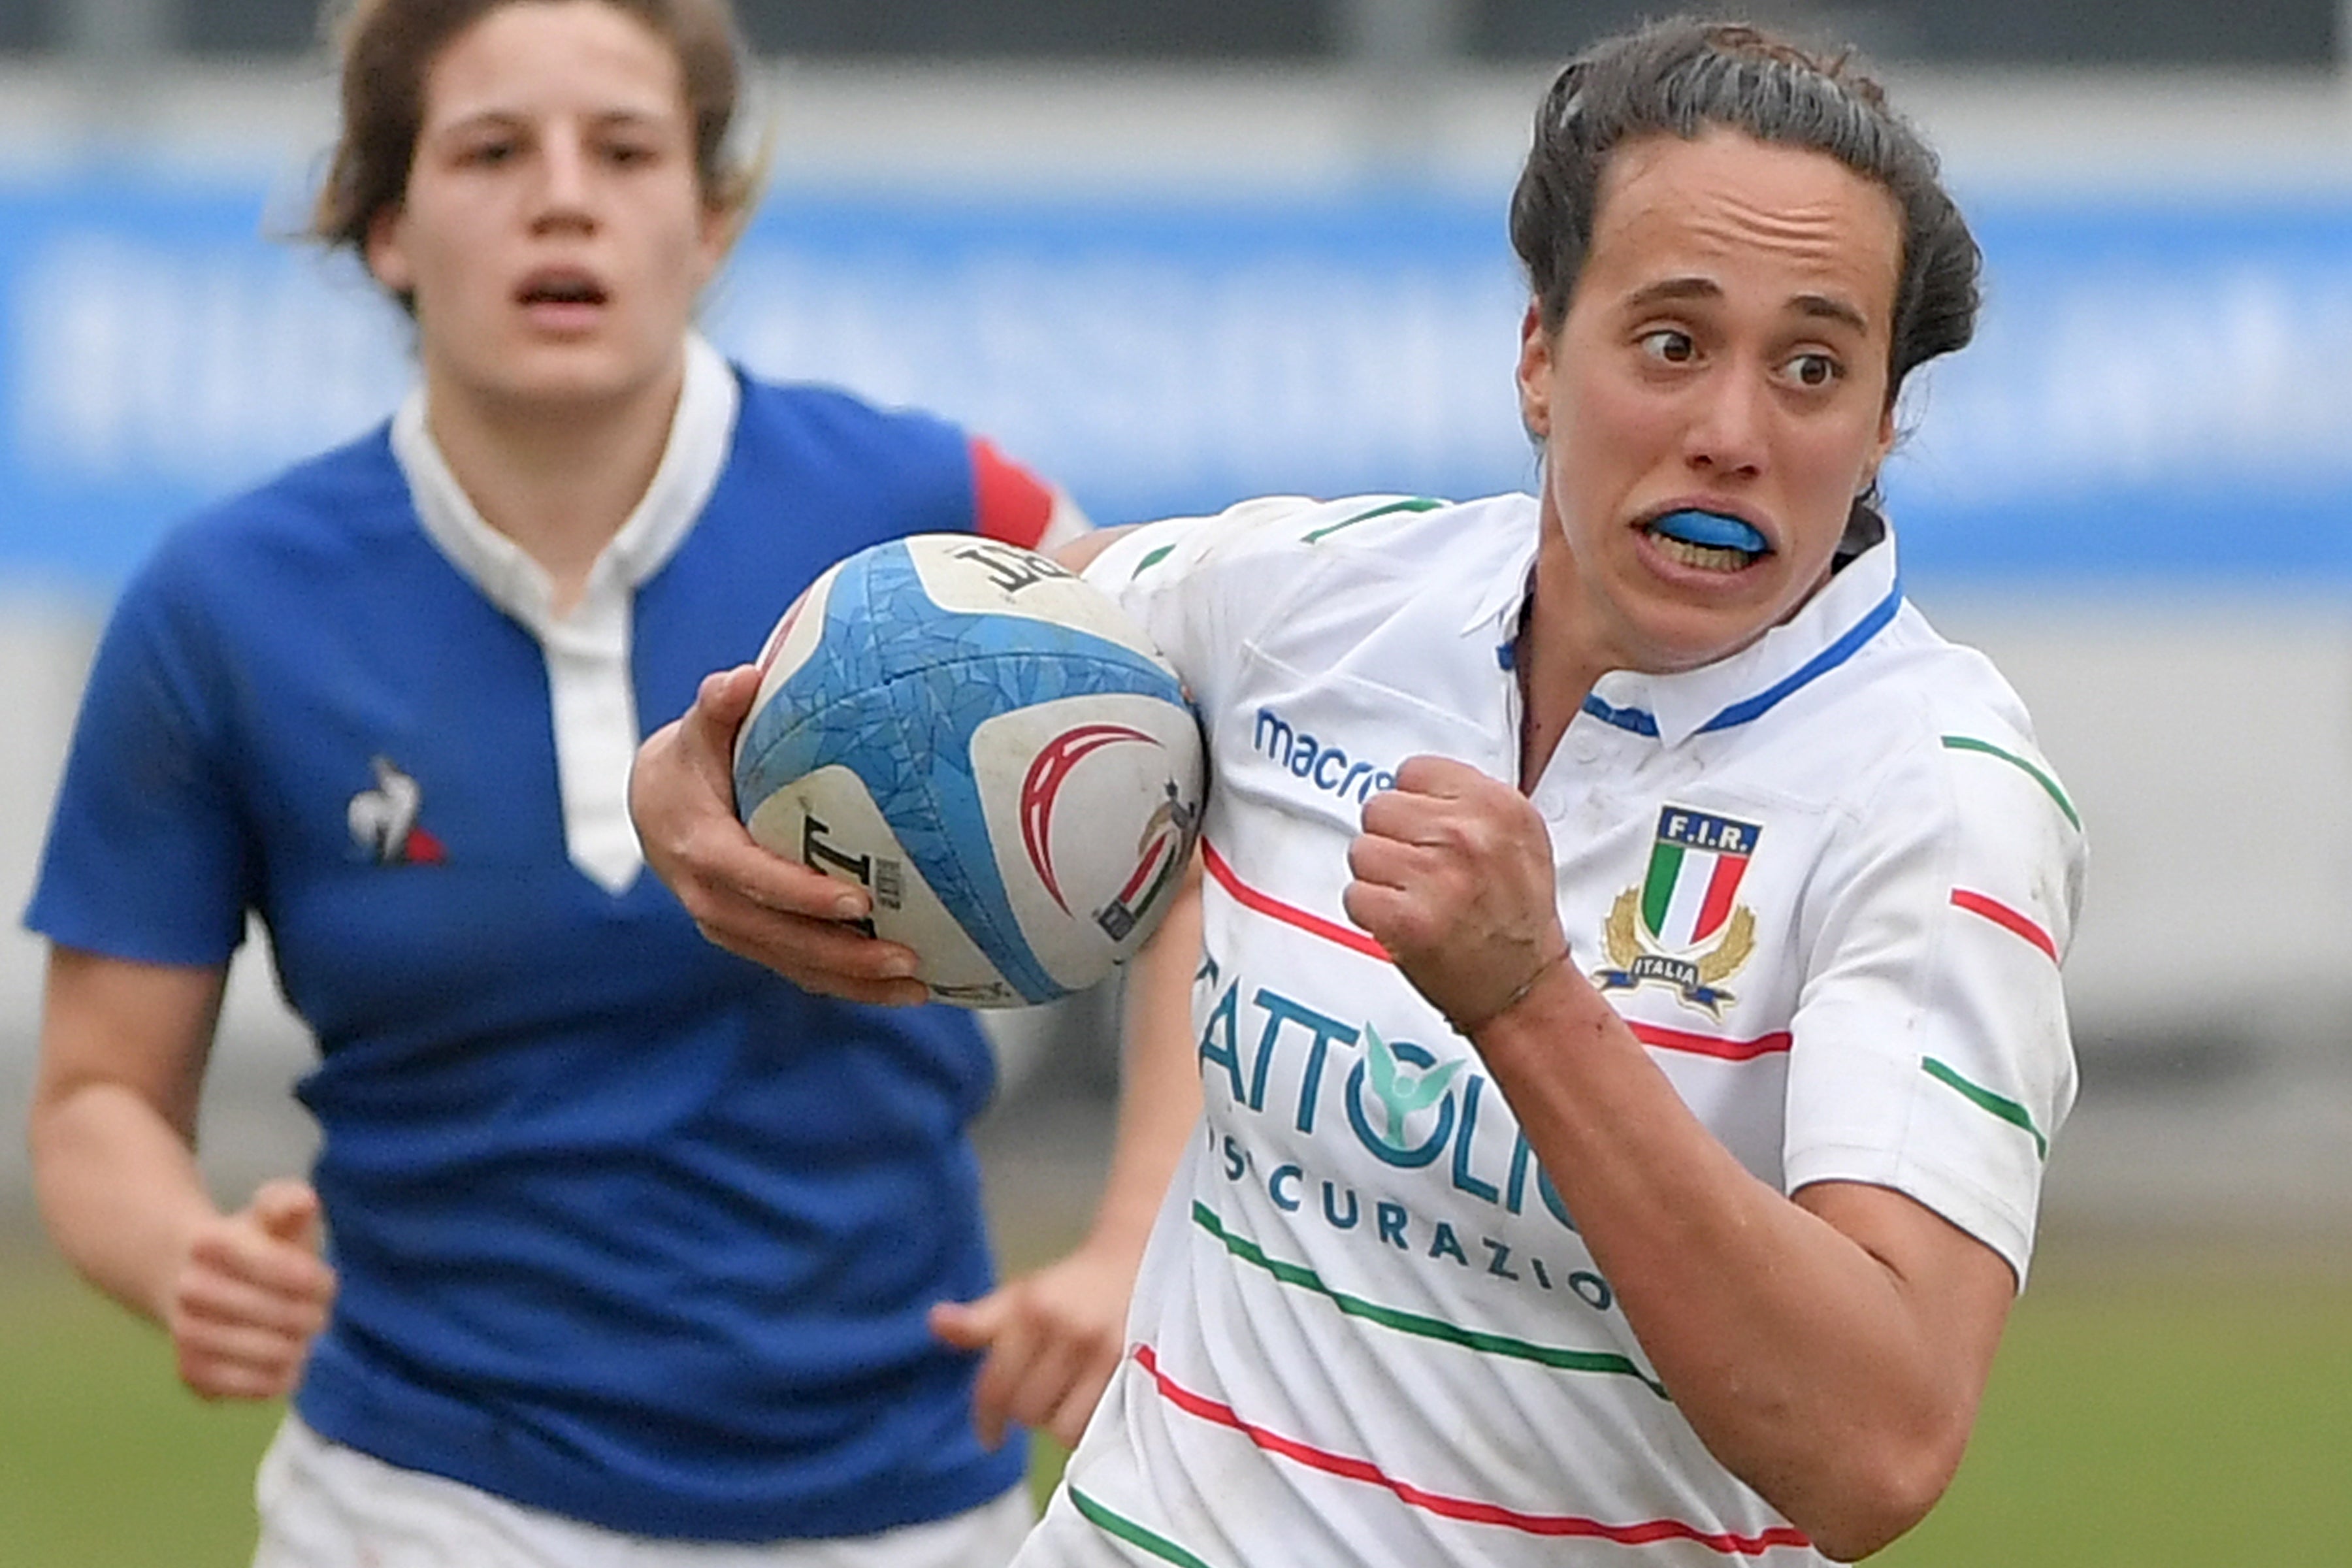 Manuela Furlan will captain Italy